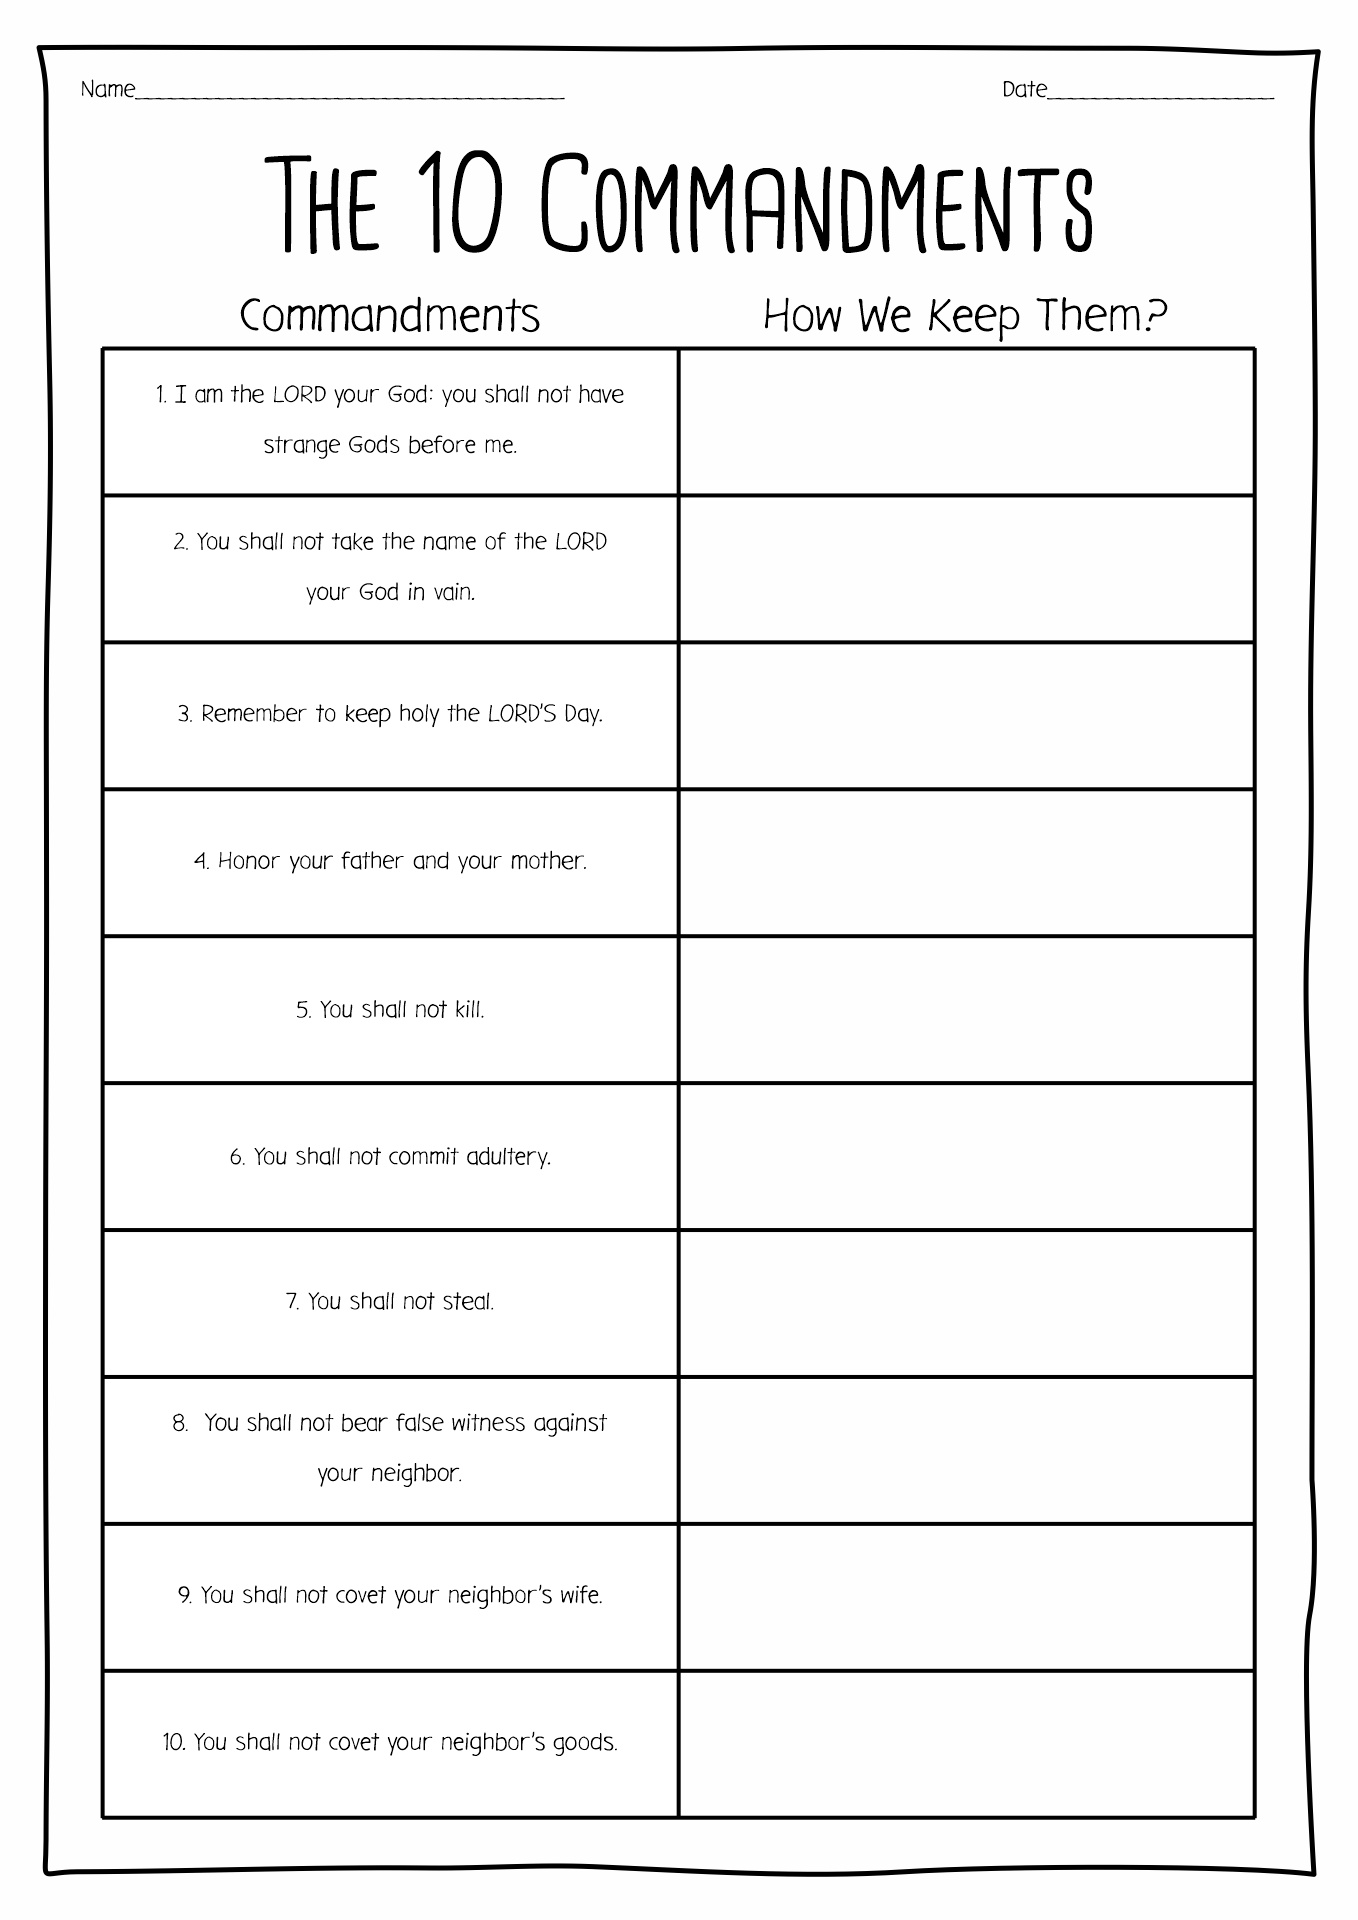 10-commandments-worksheet